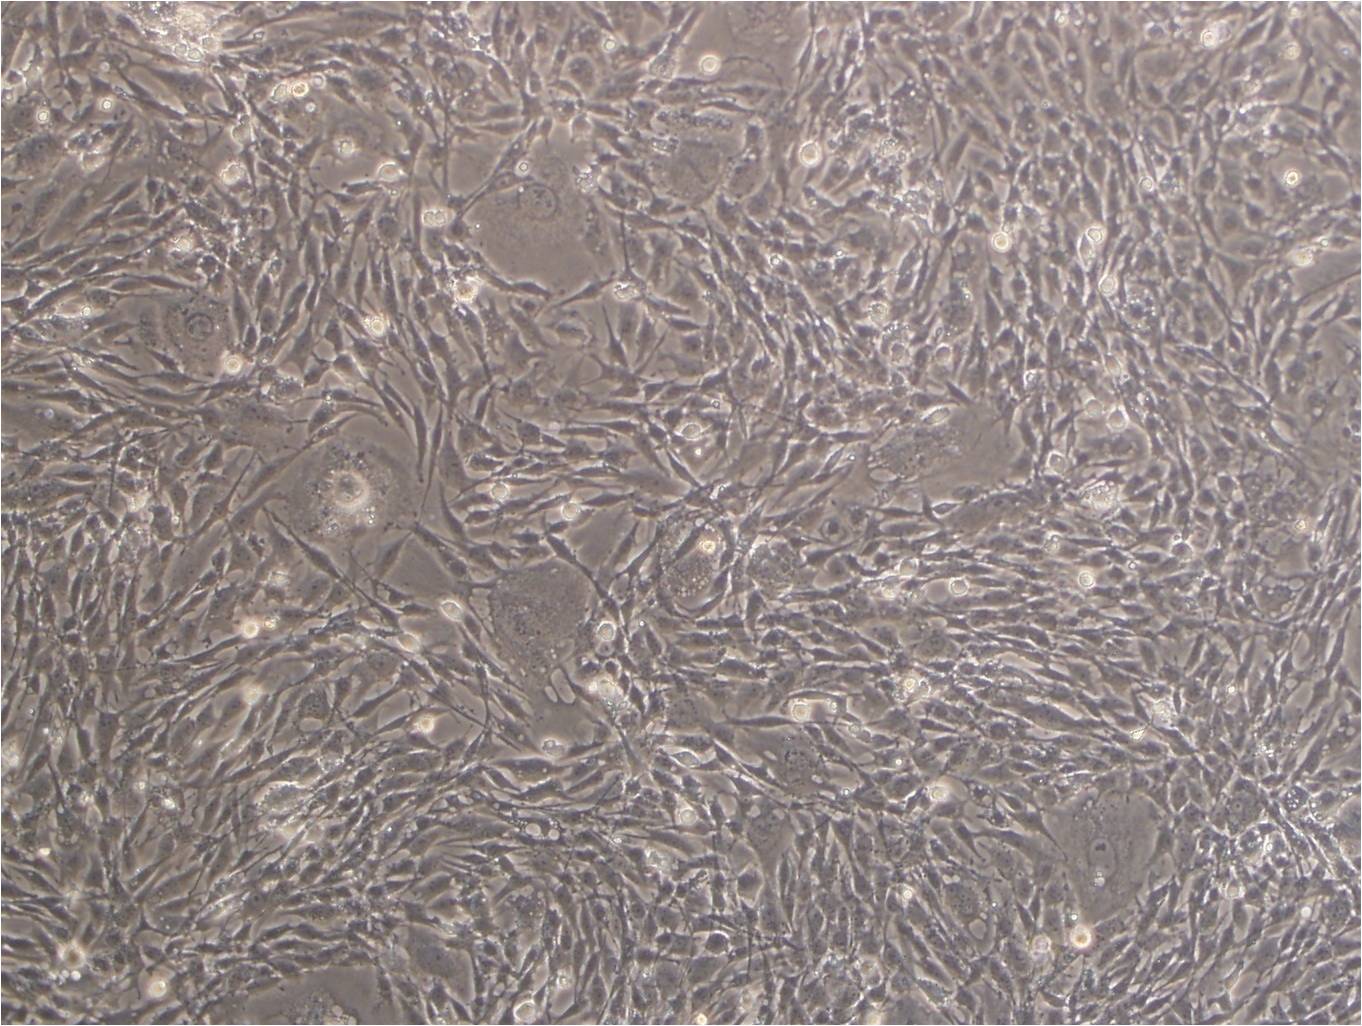 CX-1 epithelioid cells人大肠癌细胞系